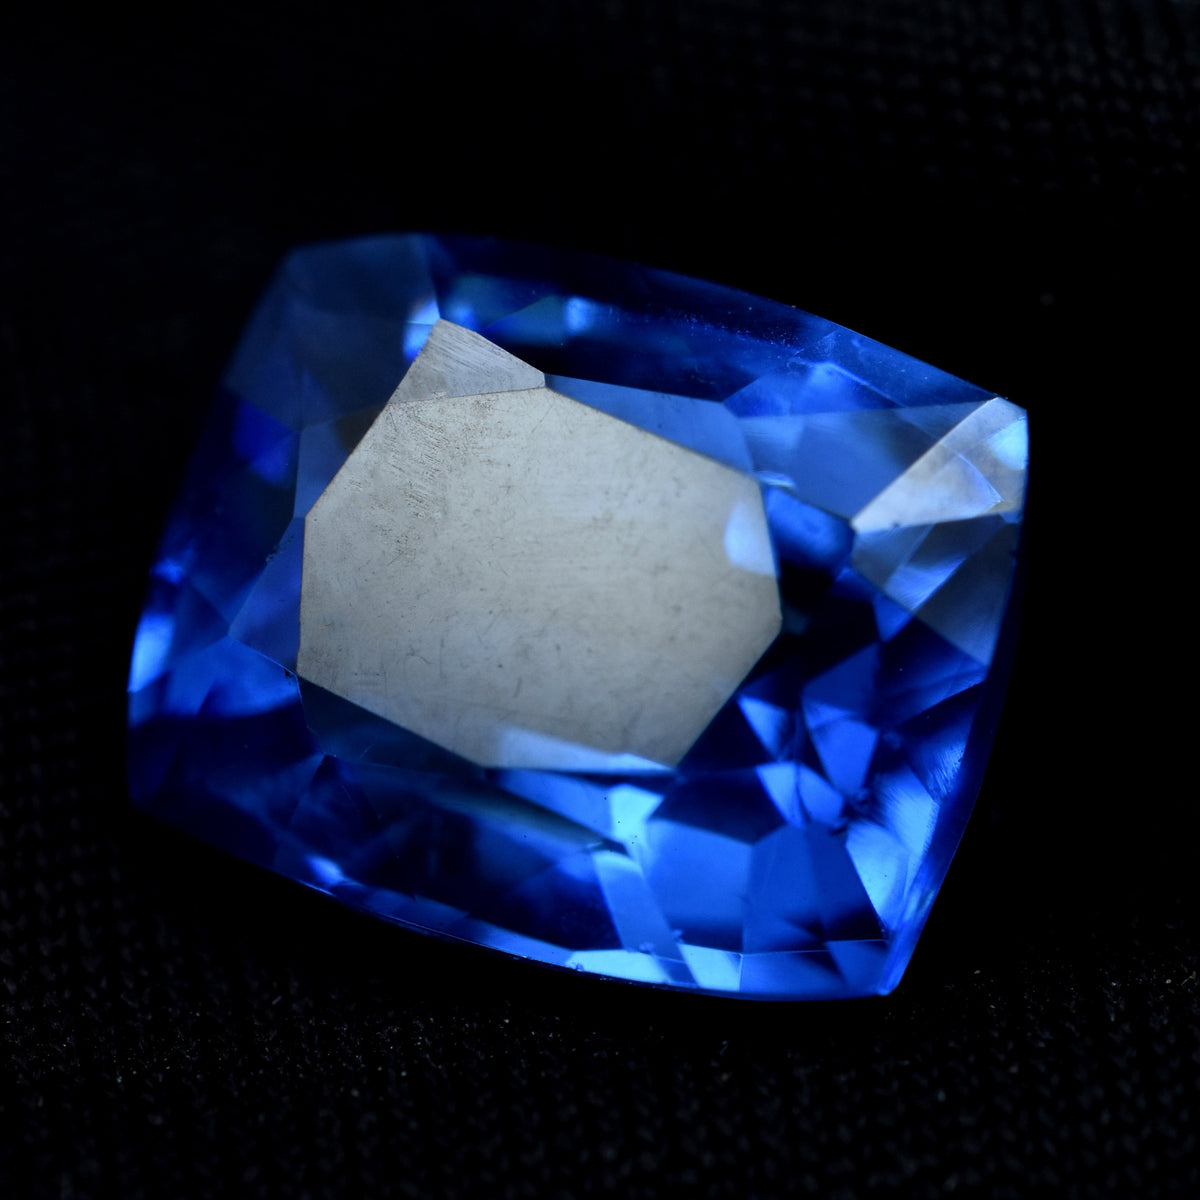 Tanzania Blue Tanzanite 10.75 Carat Blue Tanzanite Emerald Shape Natural Certified Loose Gemstone